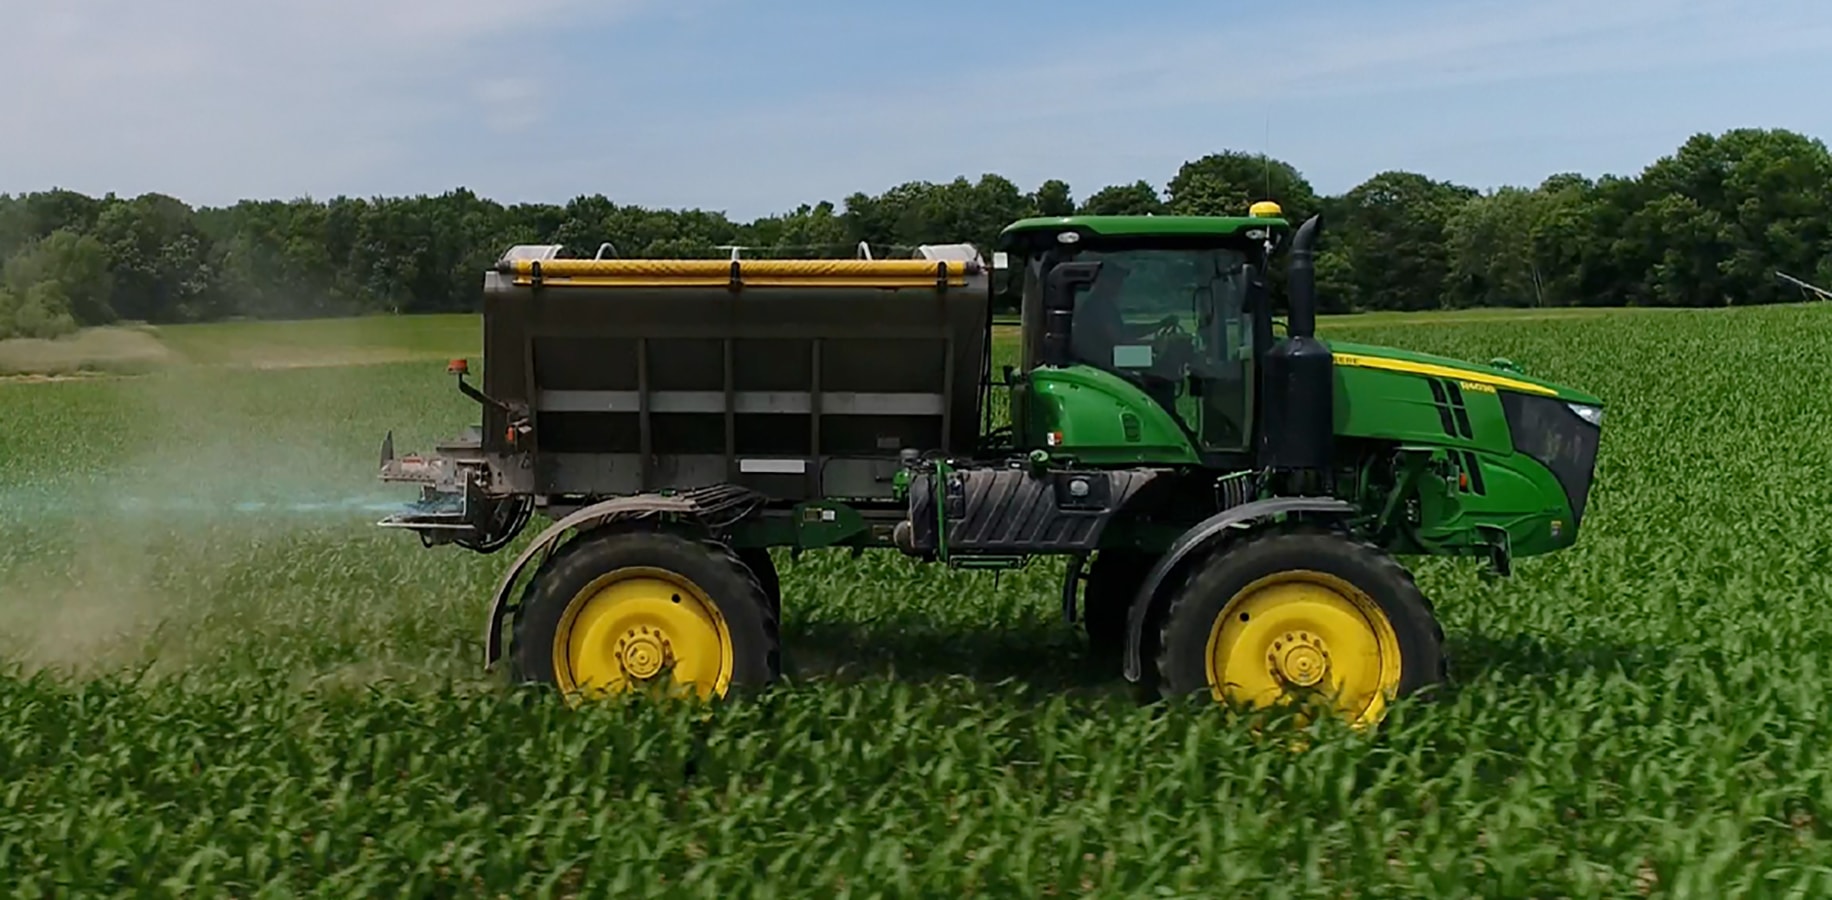 Tractor in corn field.